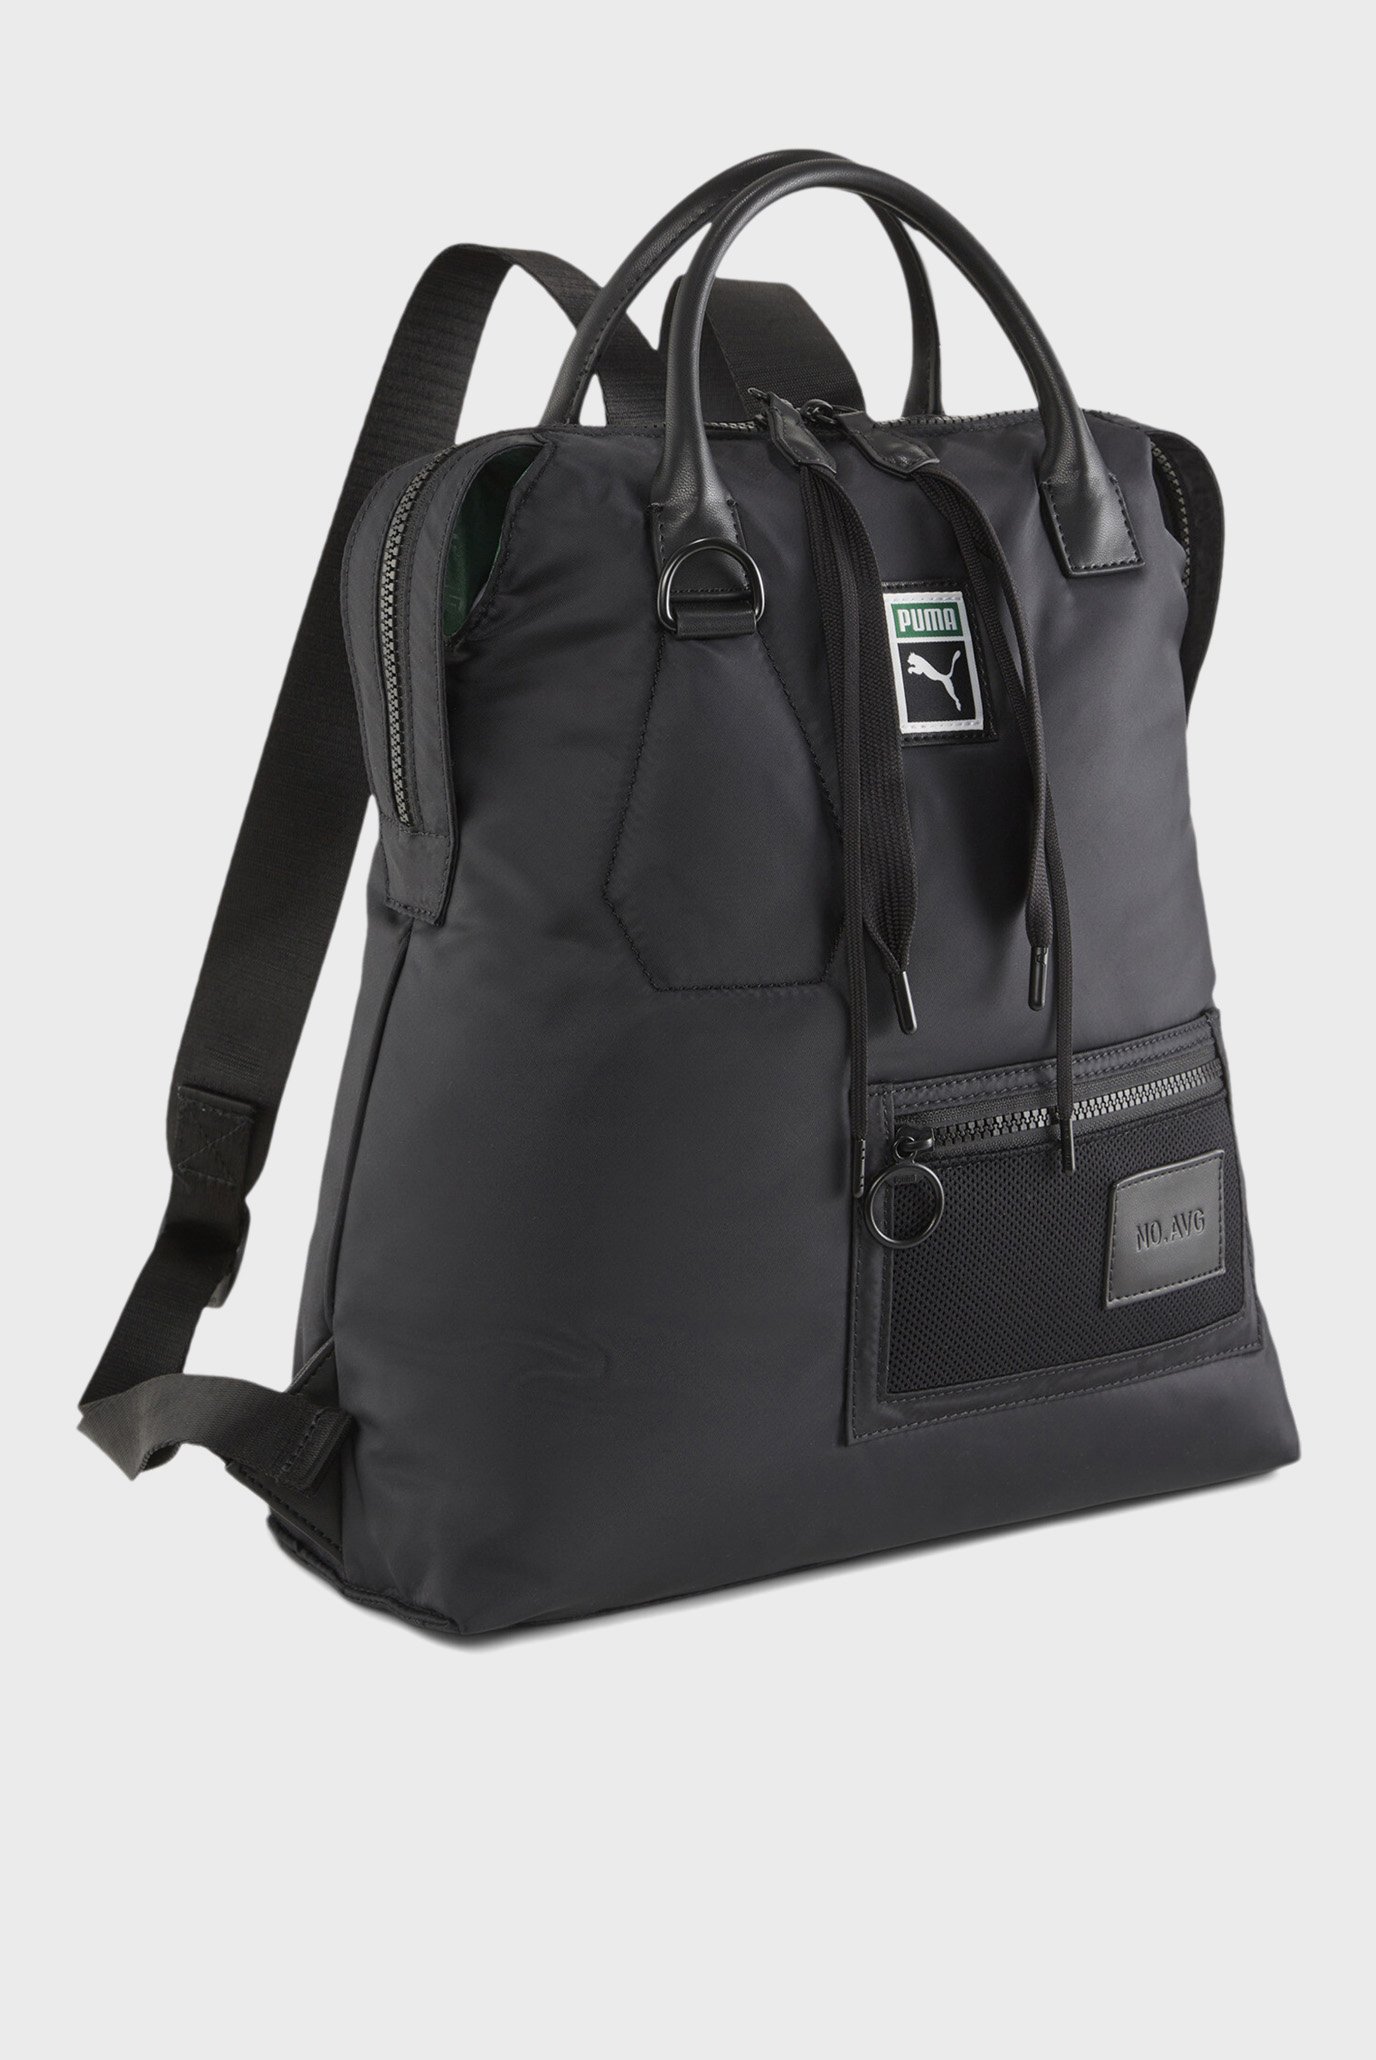 Черный рюкзак NO.AVG Backpack 1